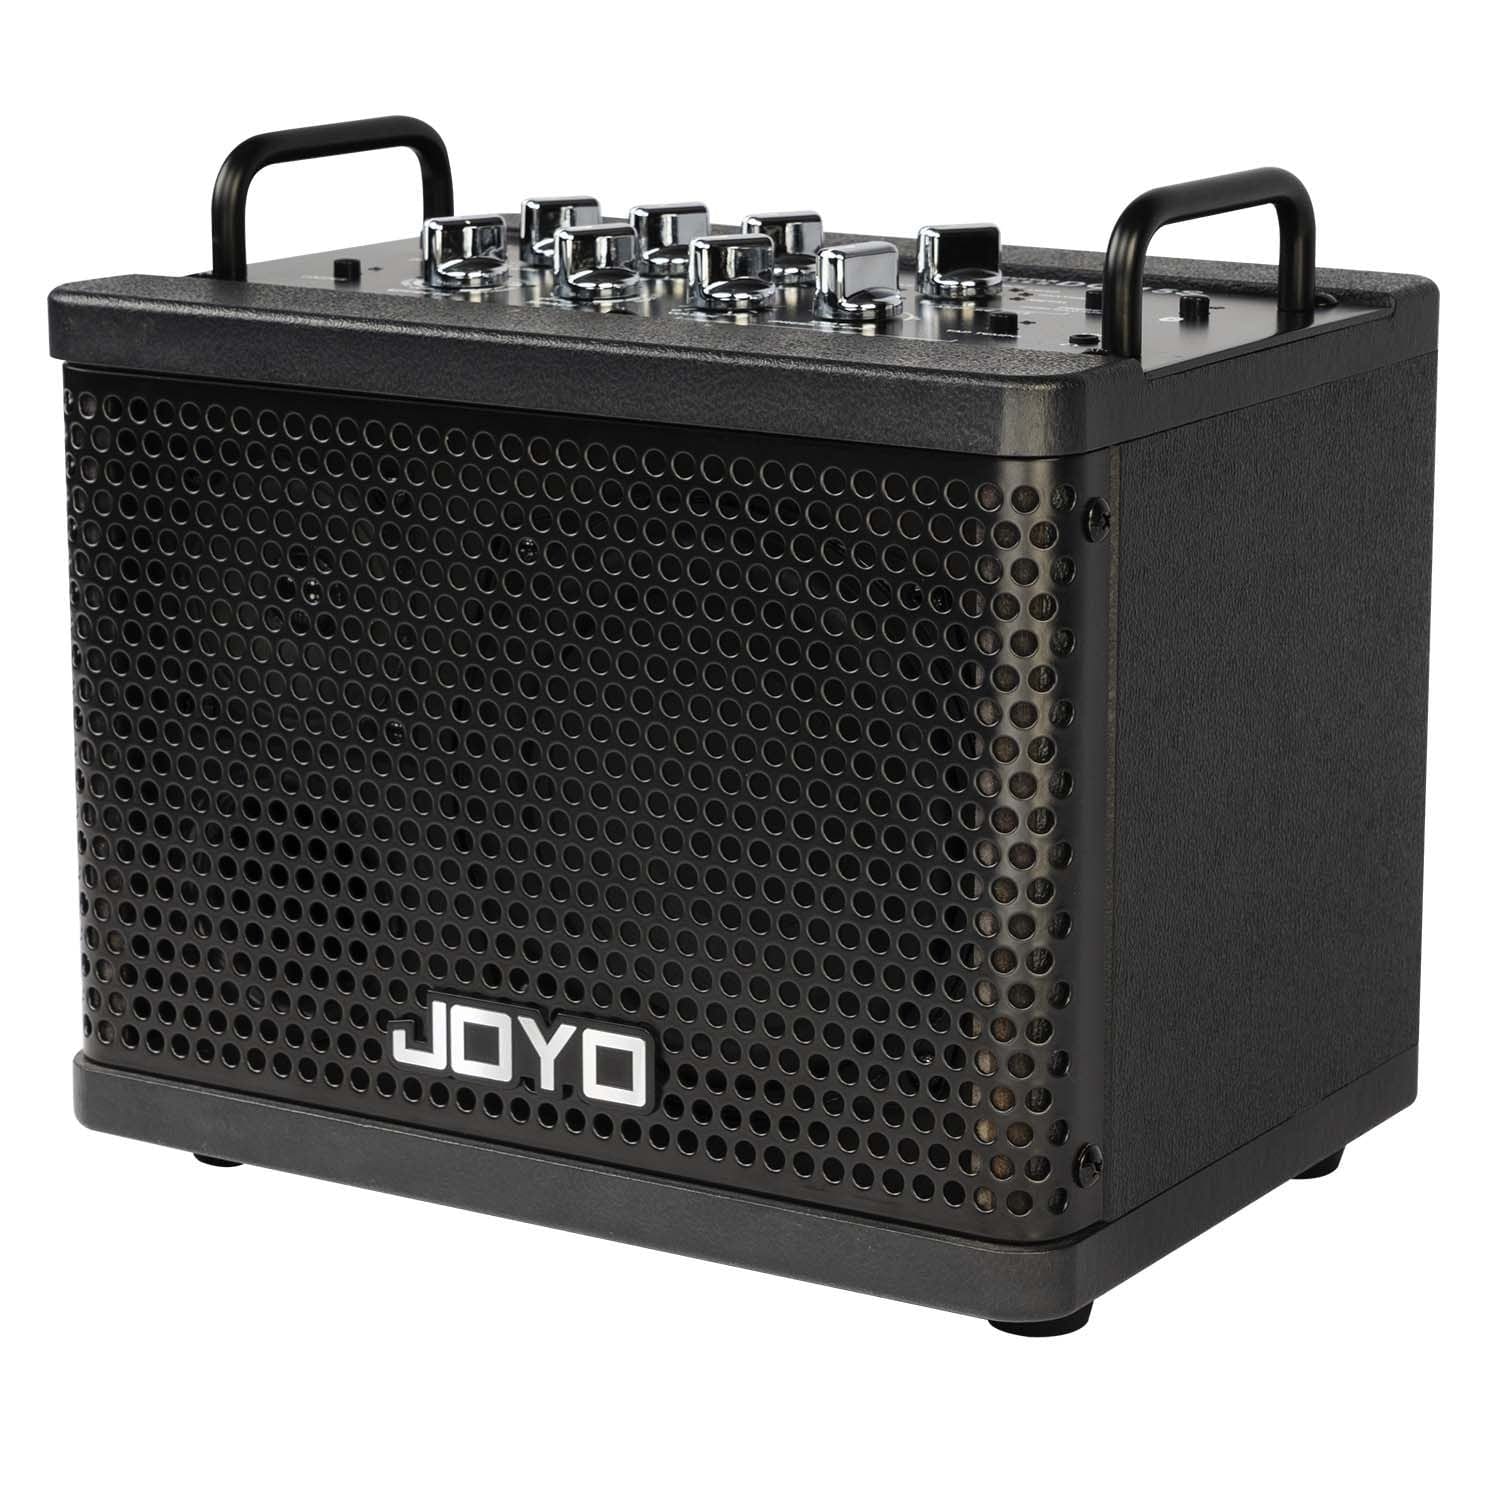 Joyo DC15S 15 Watts Digital Guitar Amplifier